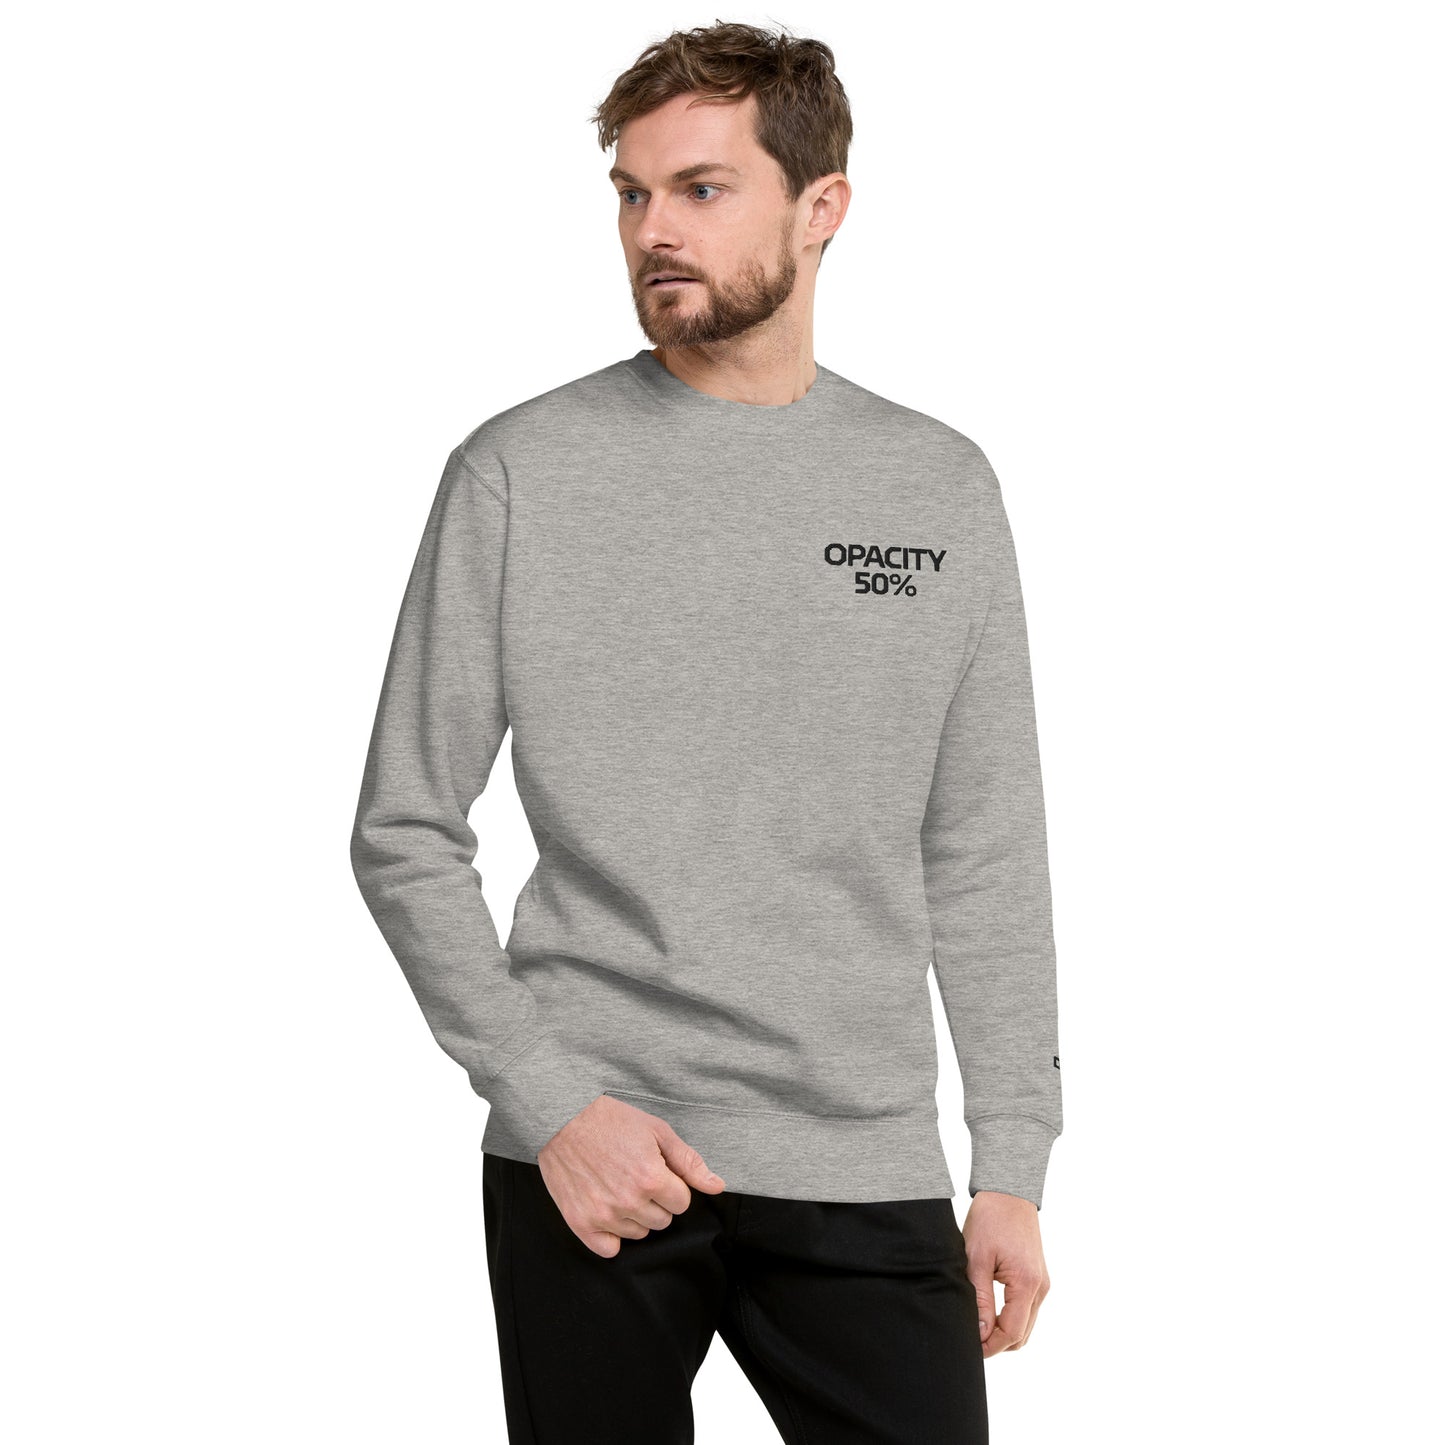 Opacity 50% Embroidered Unisex Premium Sweatshirt